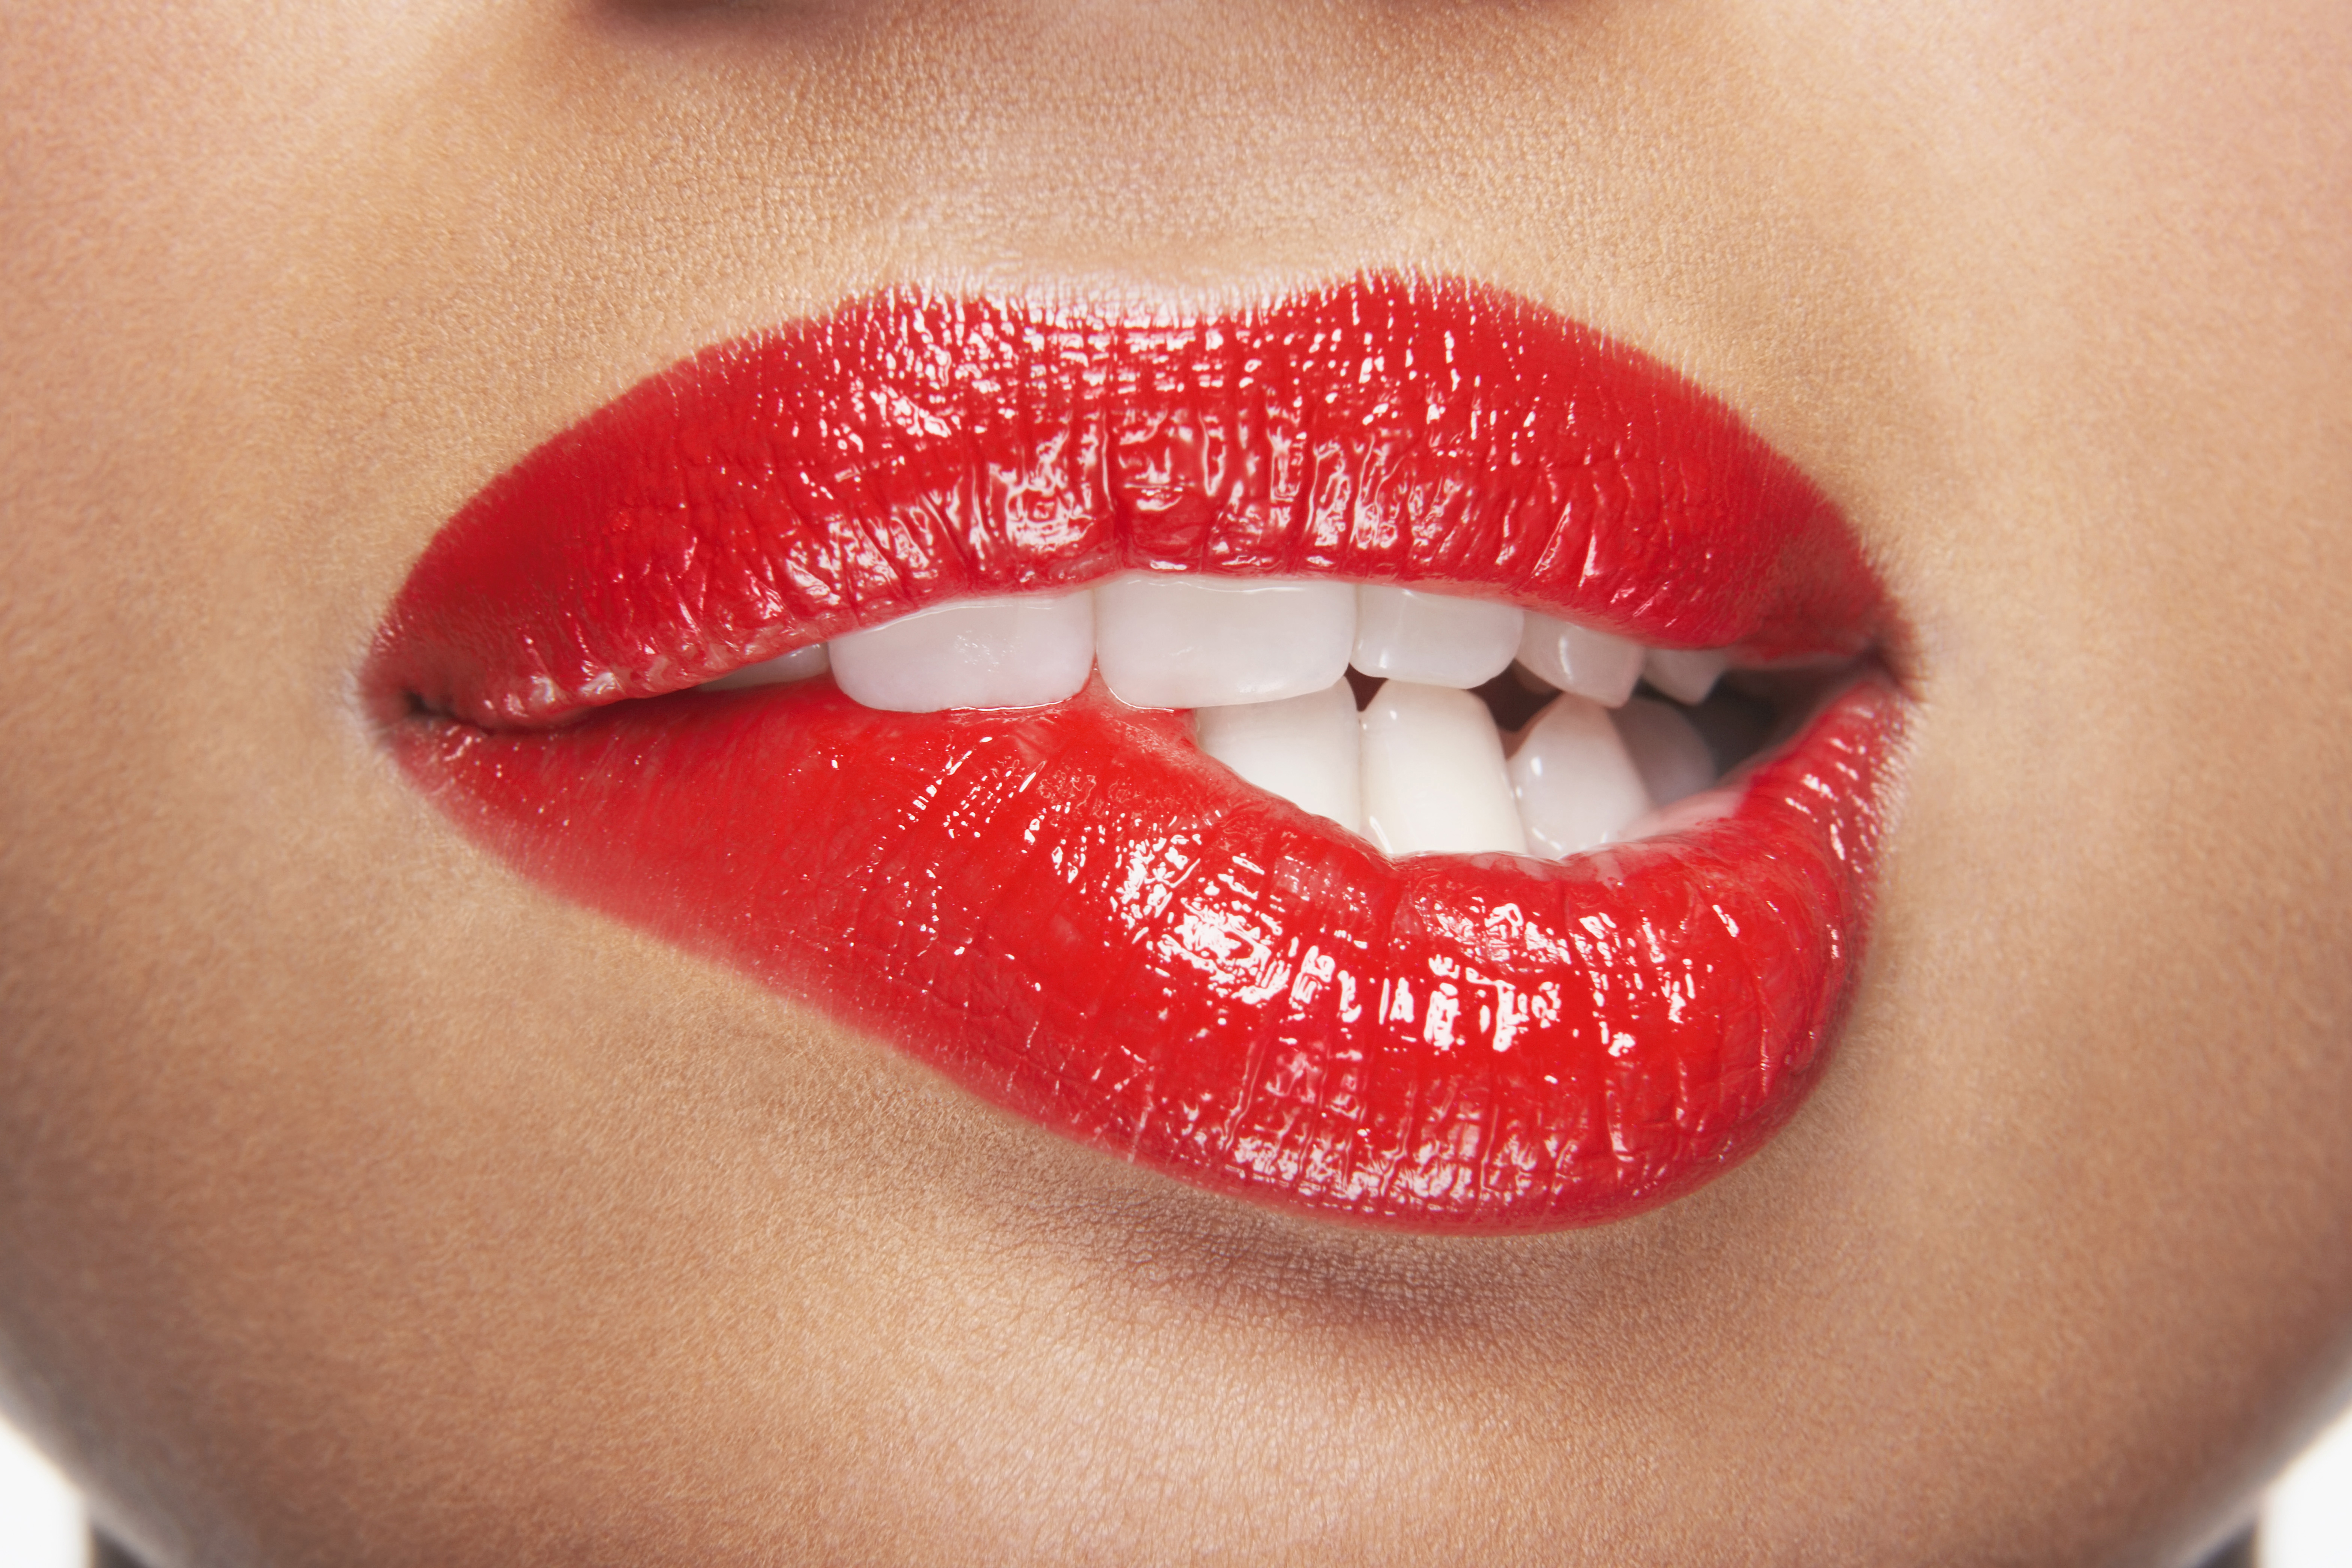 Biting kisses. Красивые губы. Красивые женские губы. Красные губы. Красивые губки.